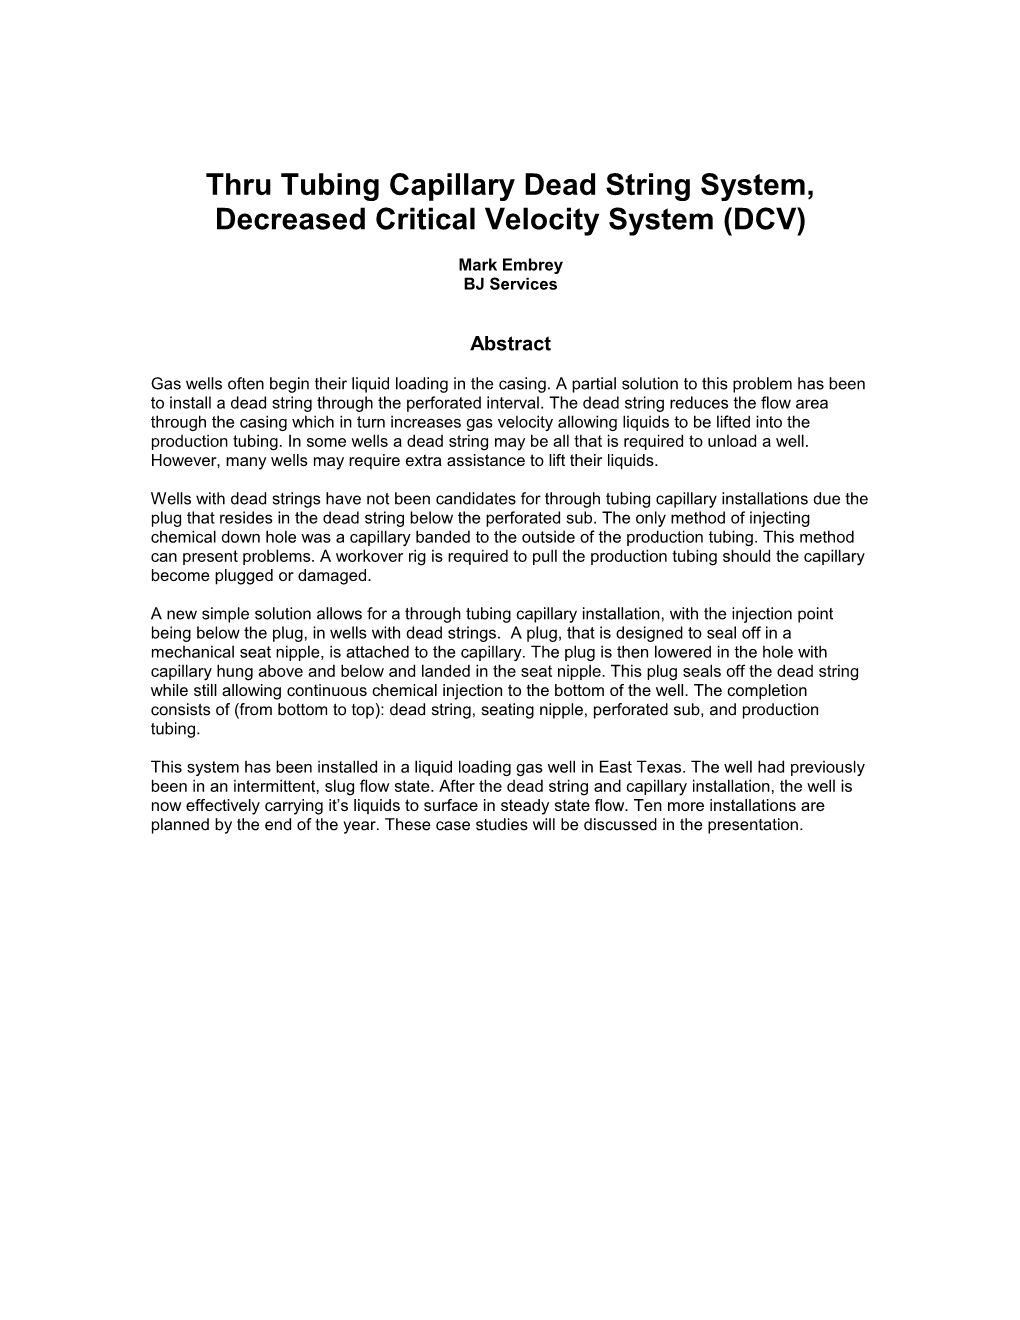 Thru Tubing Capillary Dead String System, Decreased Critical Velocity System (DCV)